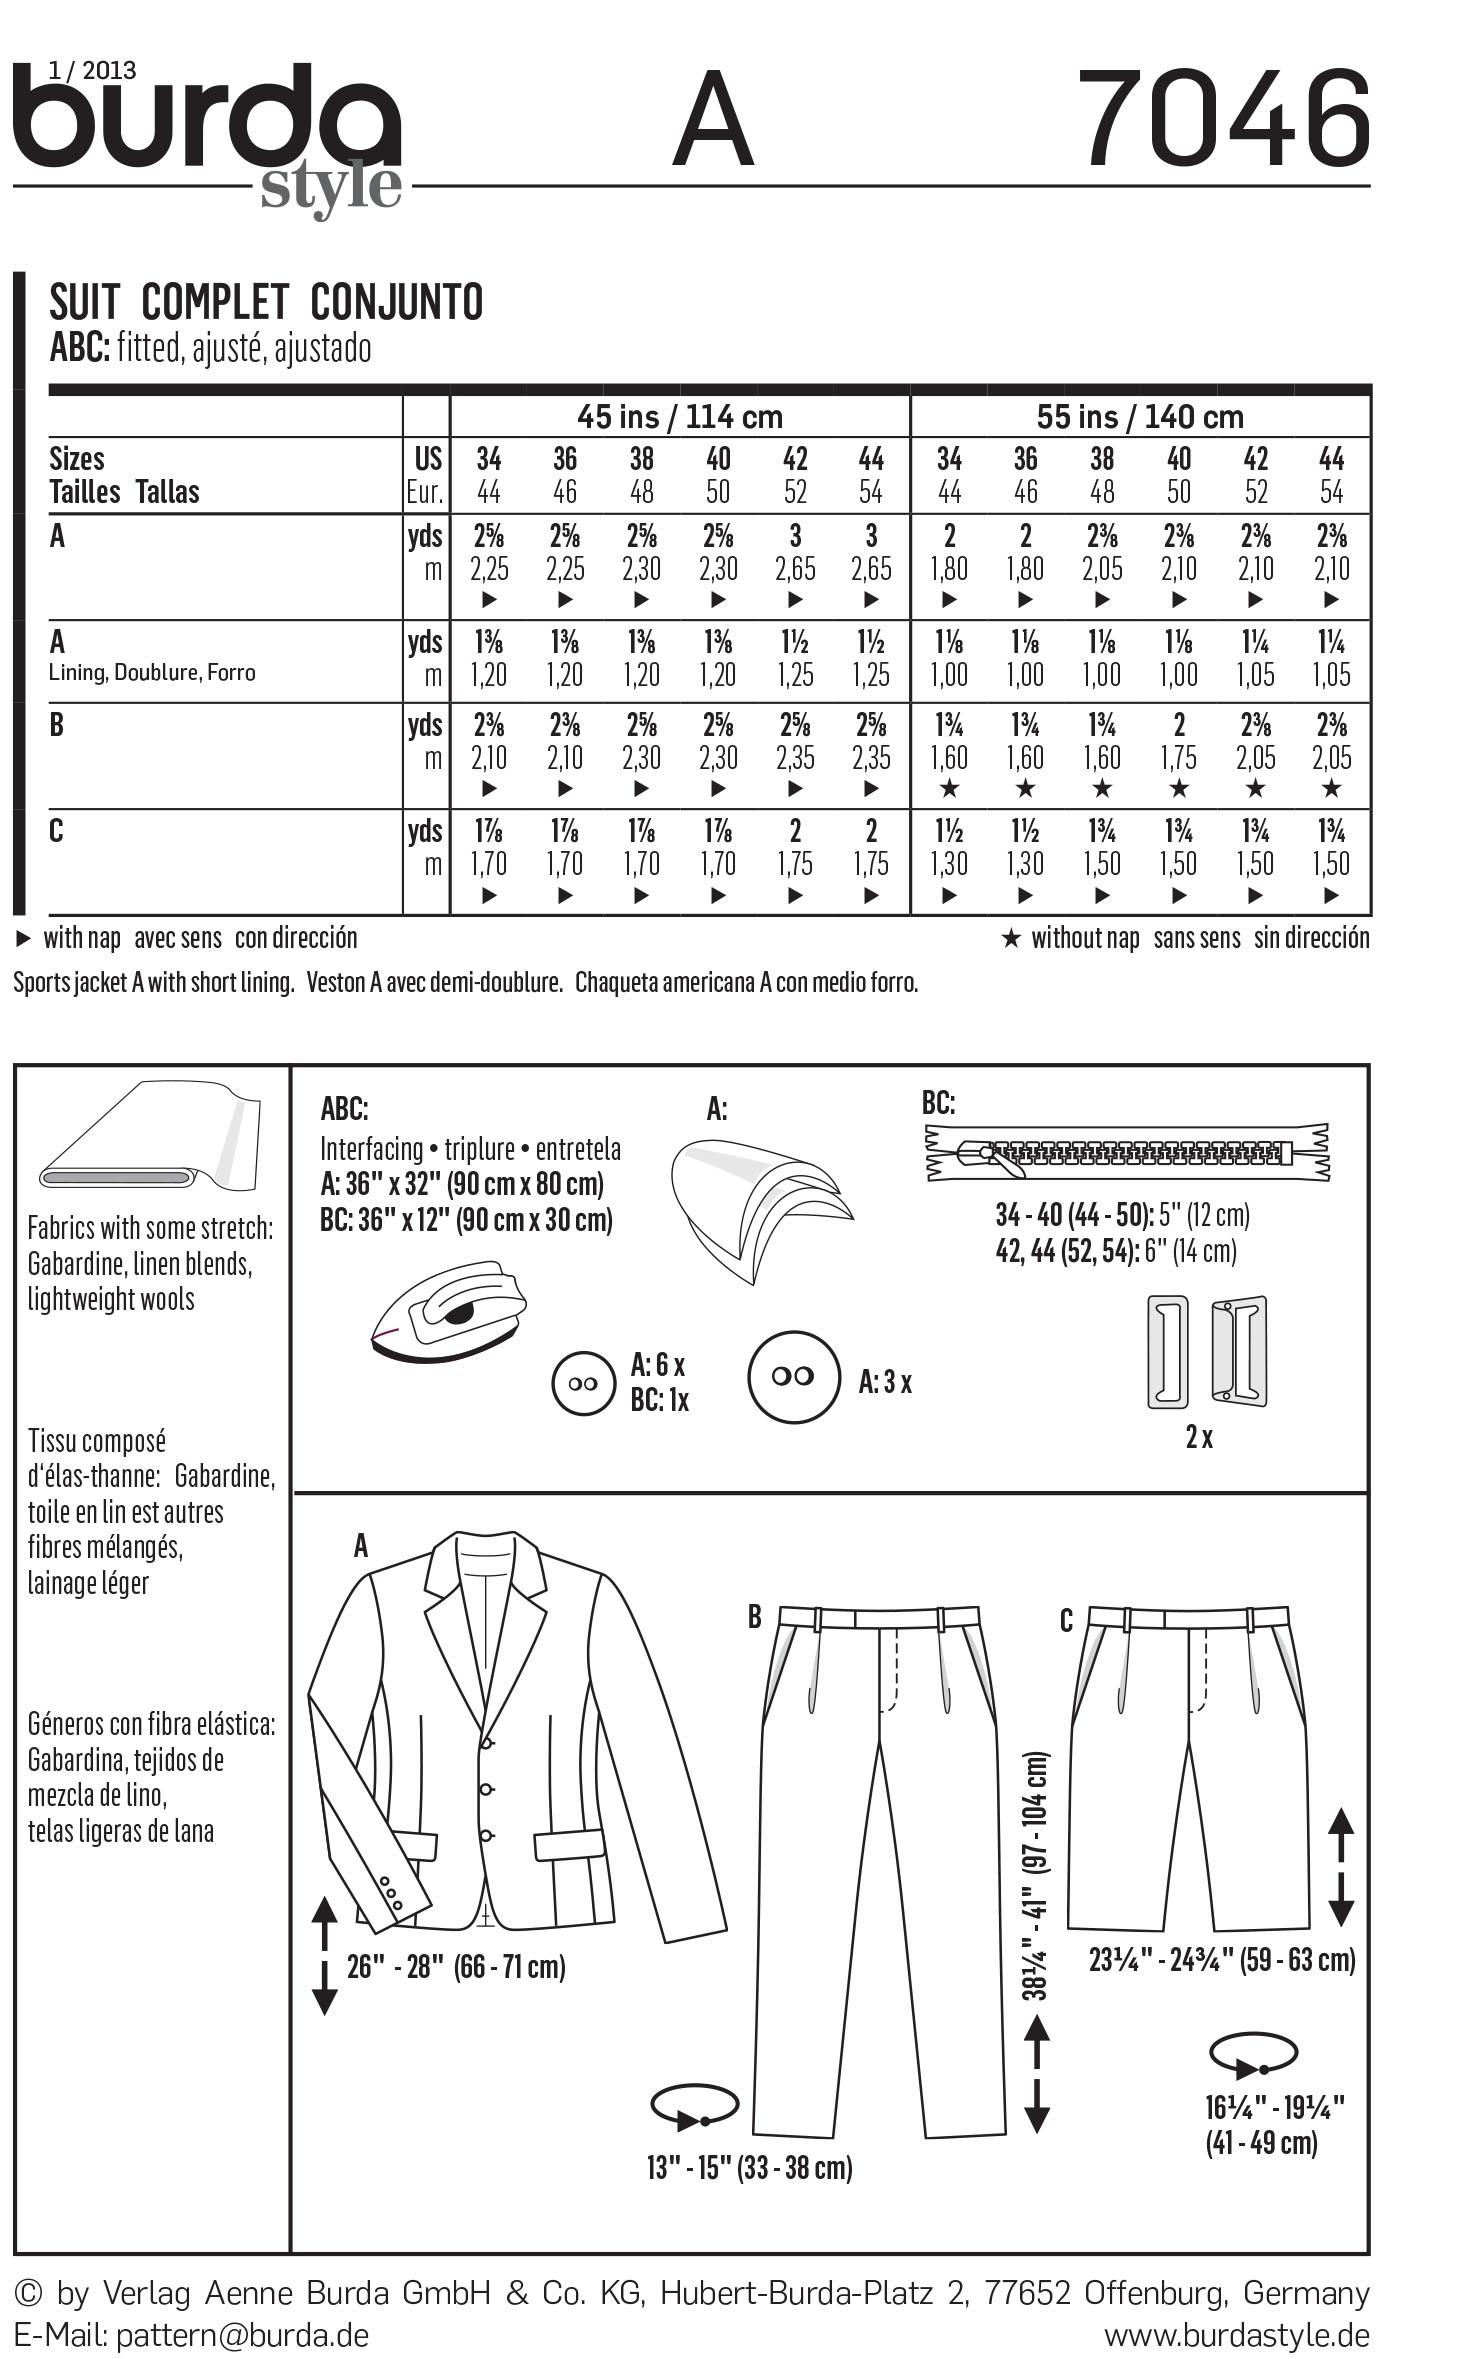 Burda B7046 Suit Sewing Pattern